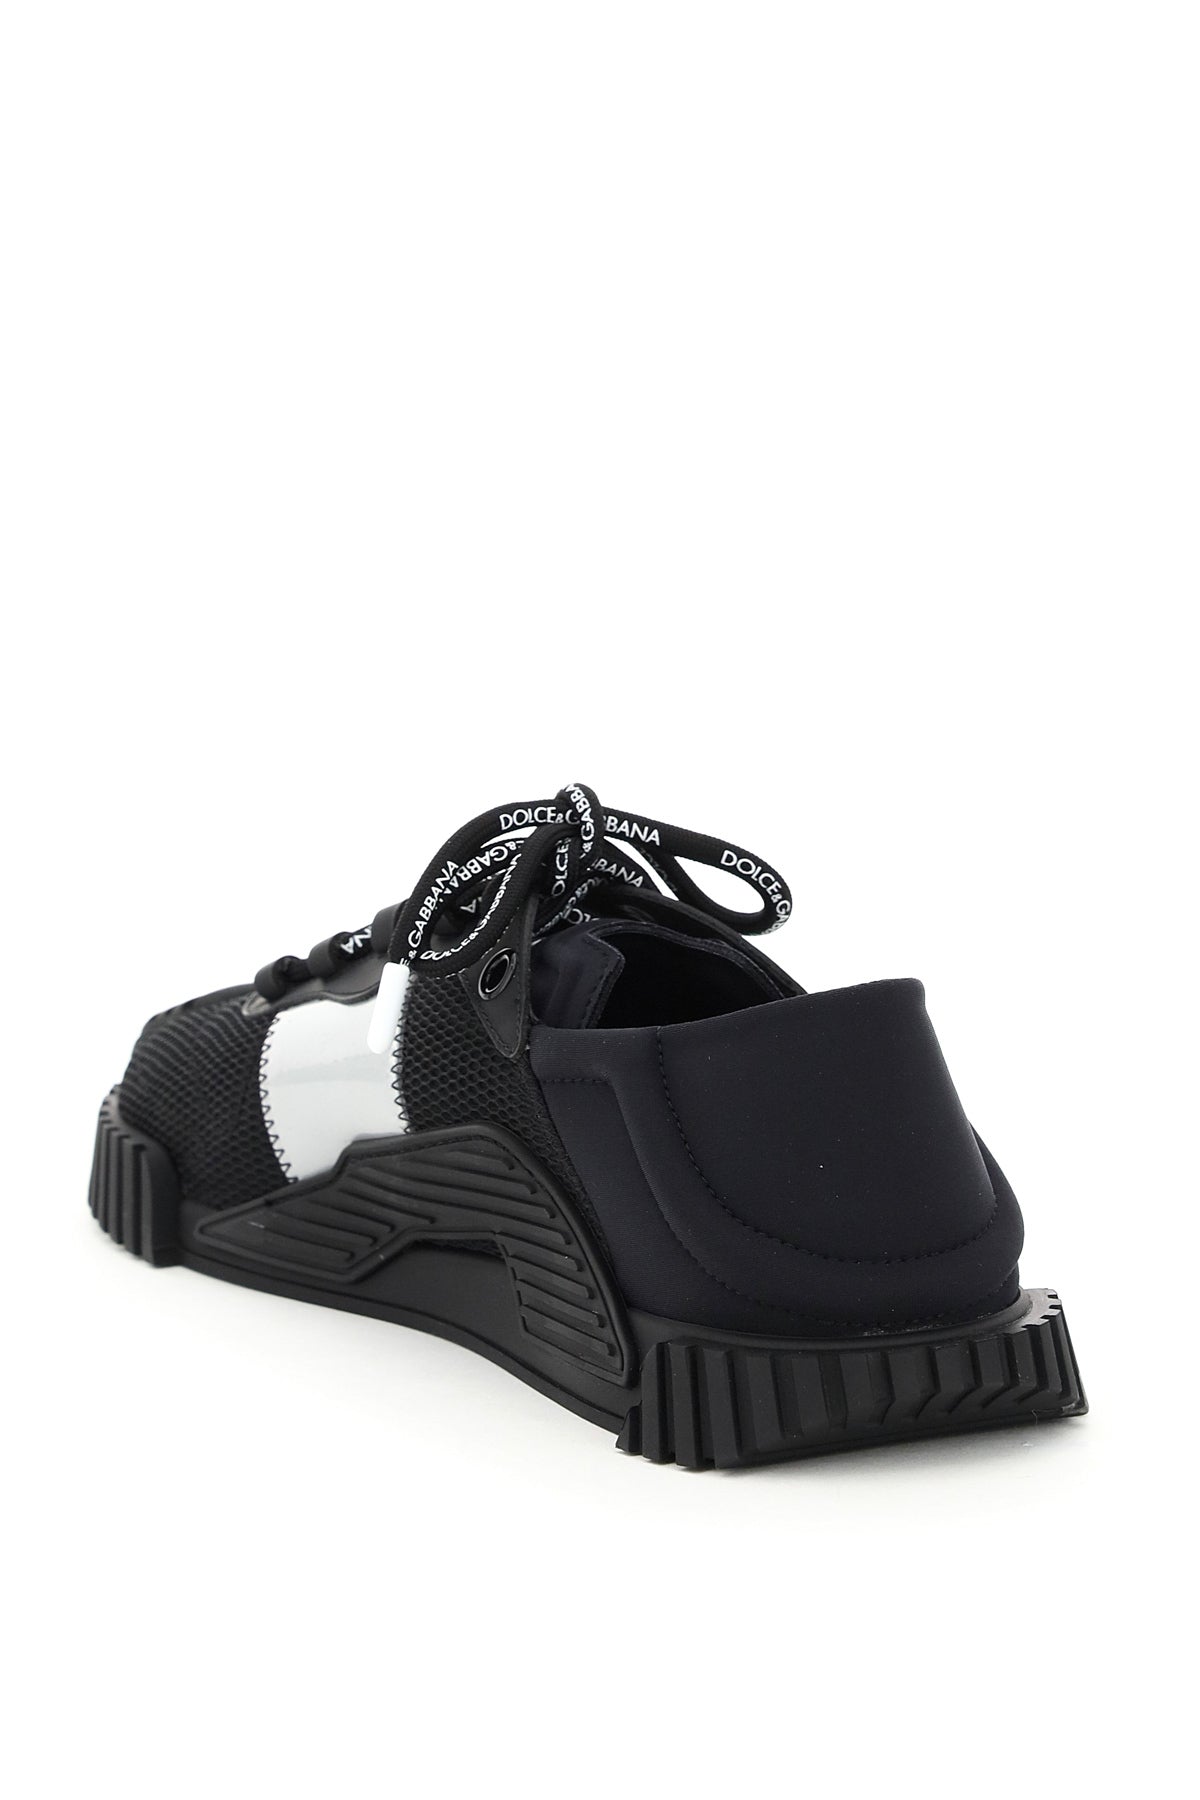 Dolce & Gabbana Neoprene Ns1 Sneakers   Black